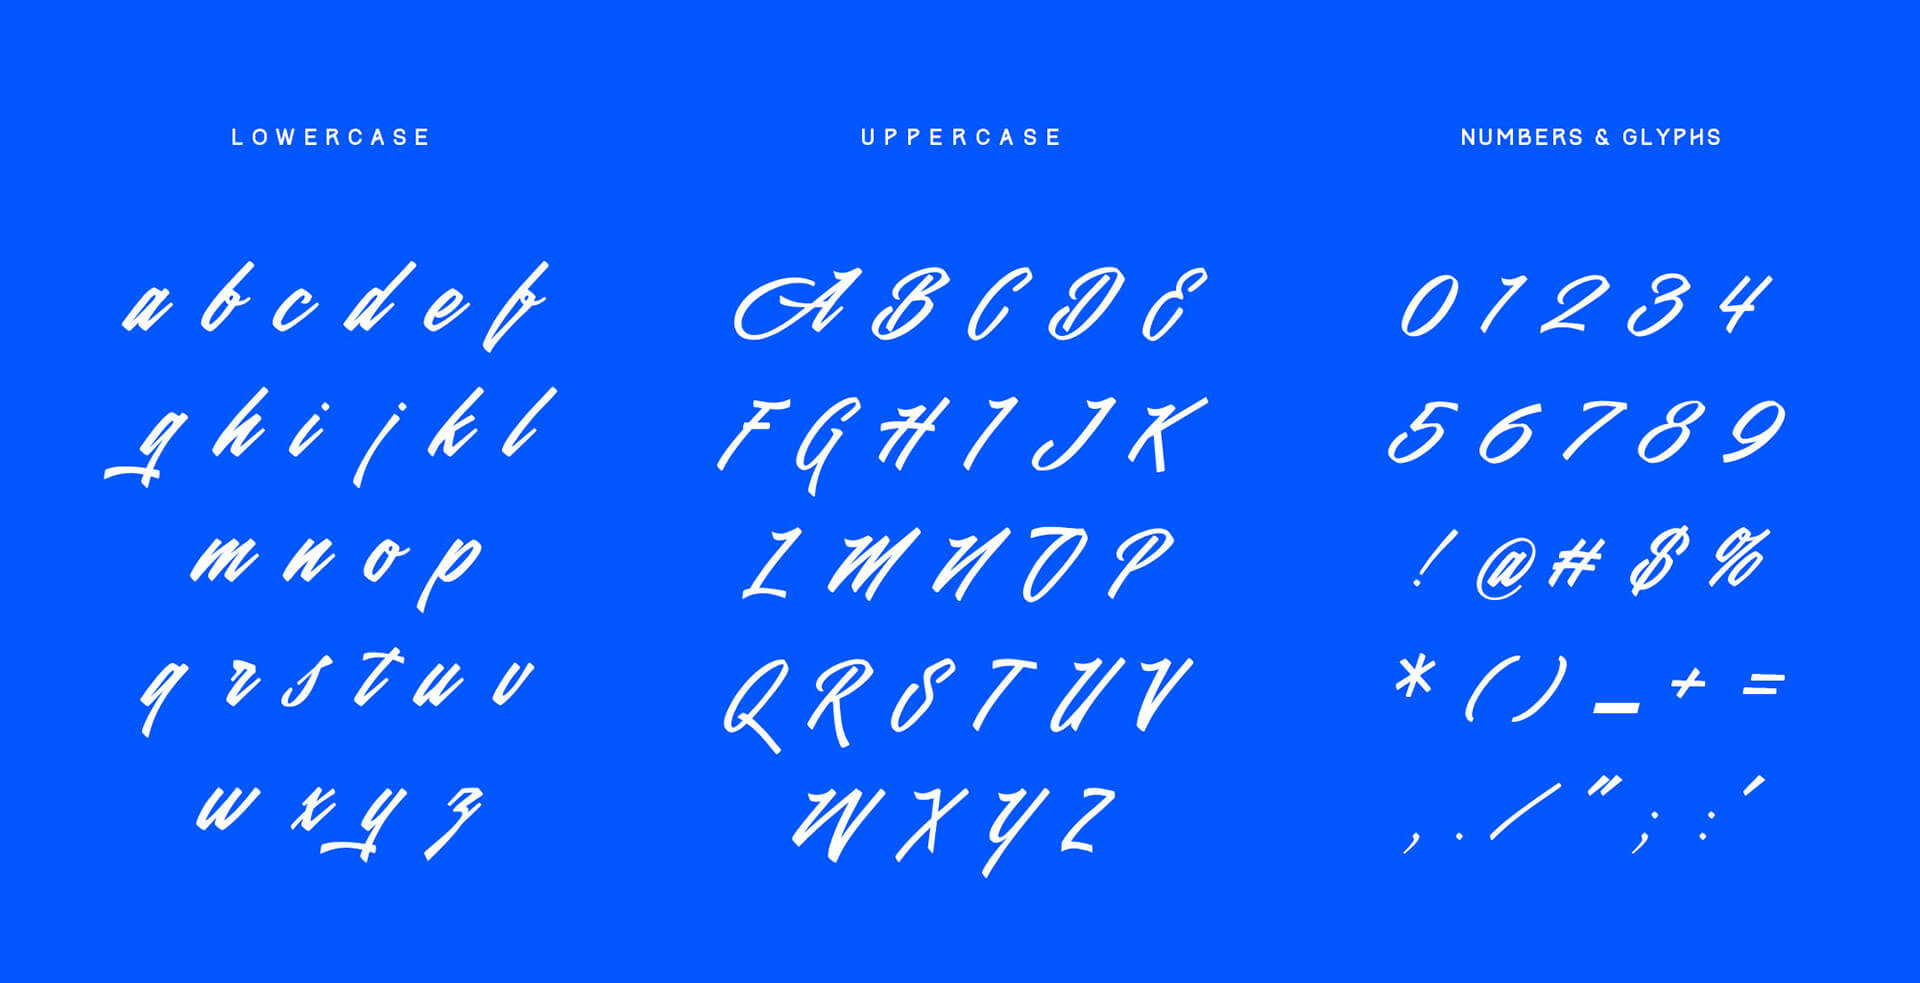 Valencia Calligraphy Typeface - script